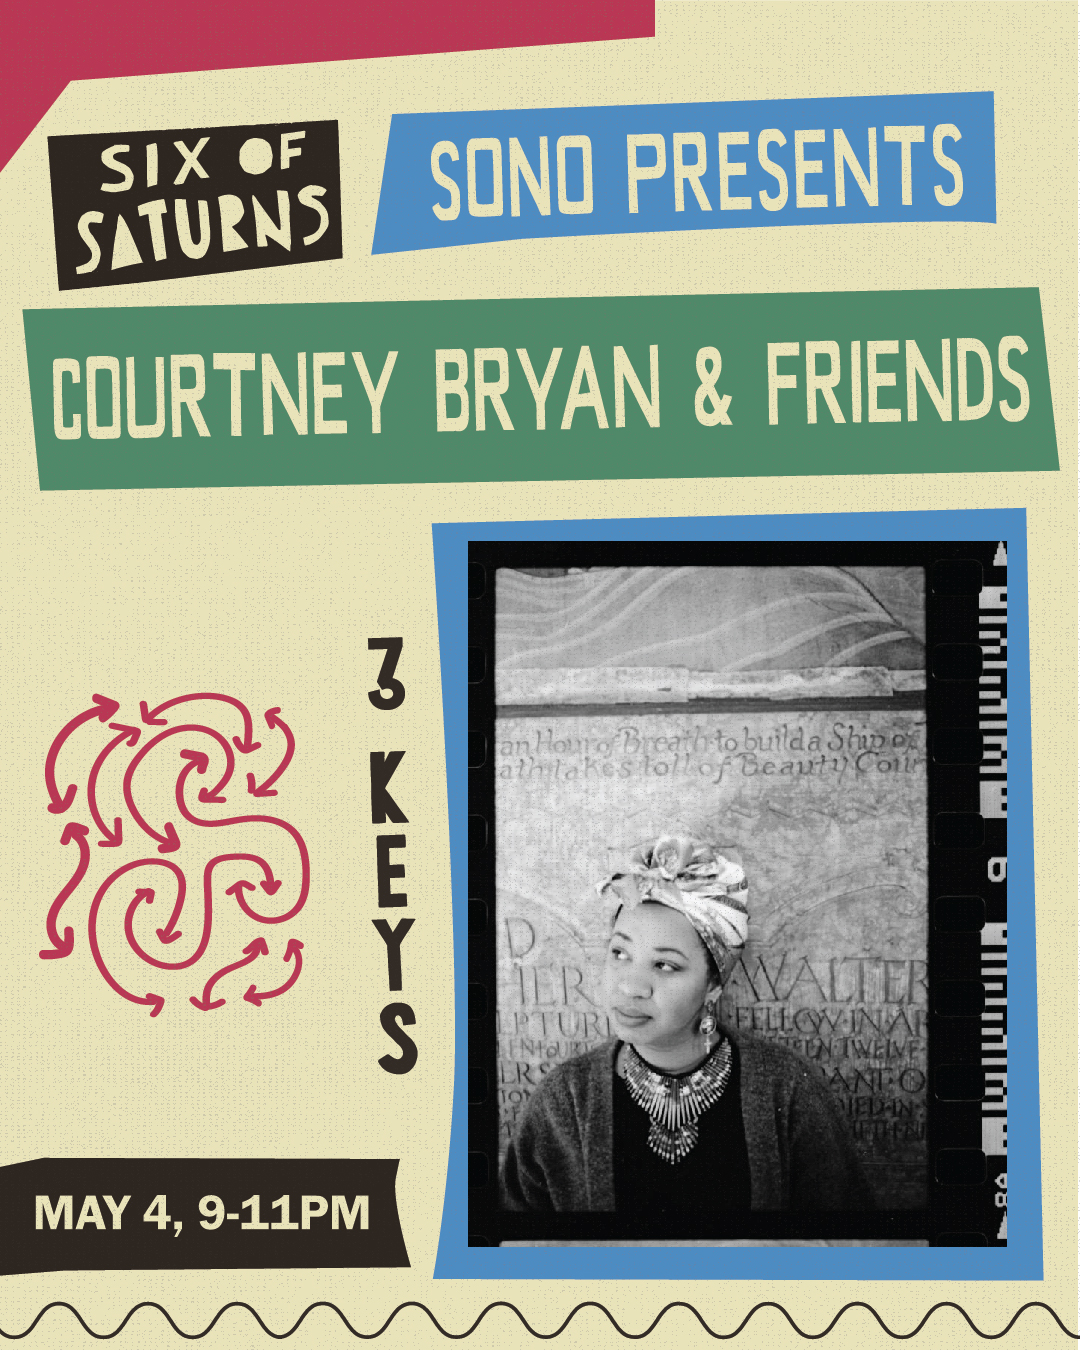 Six of Saturns: SONO Presents Courtney Bryan promo